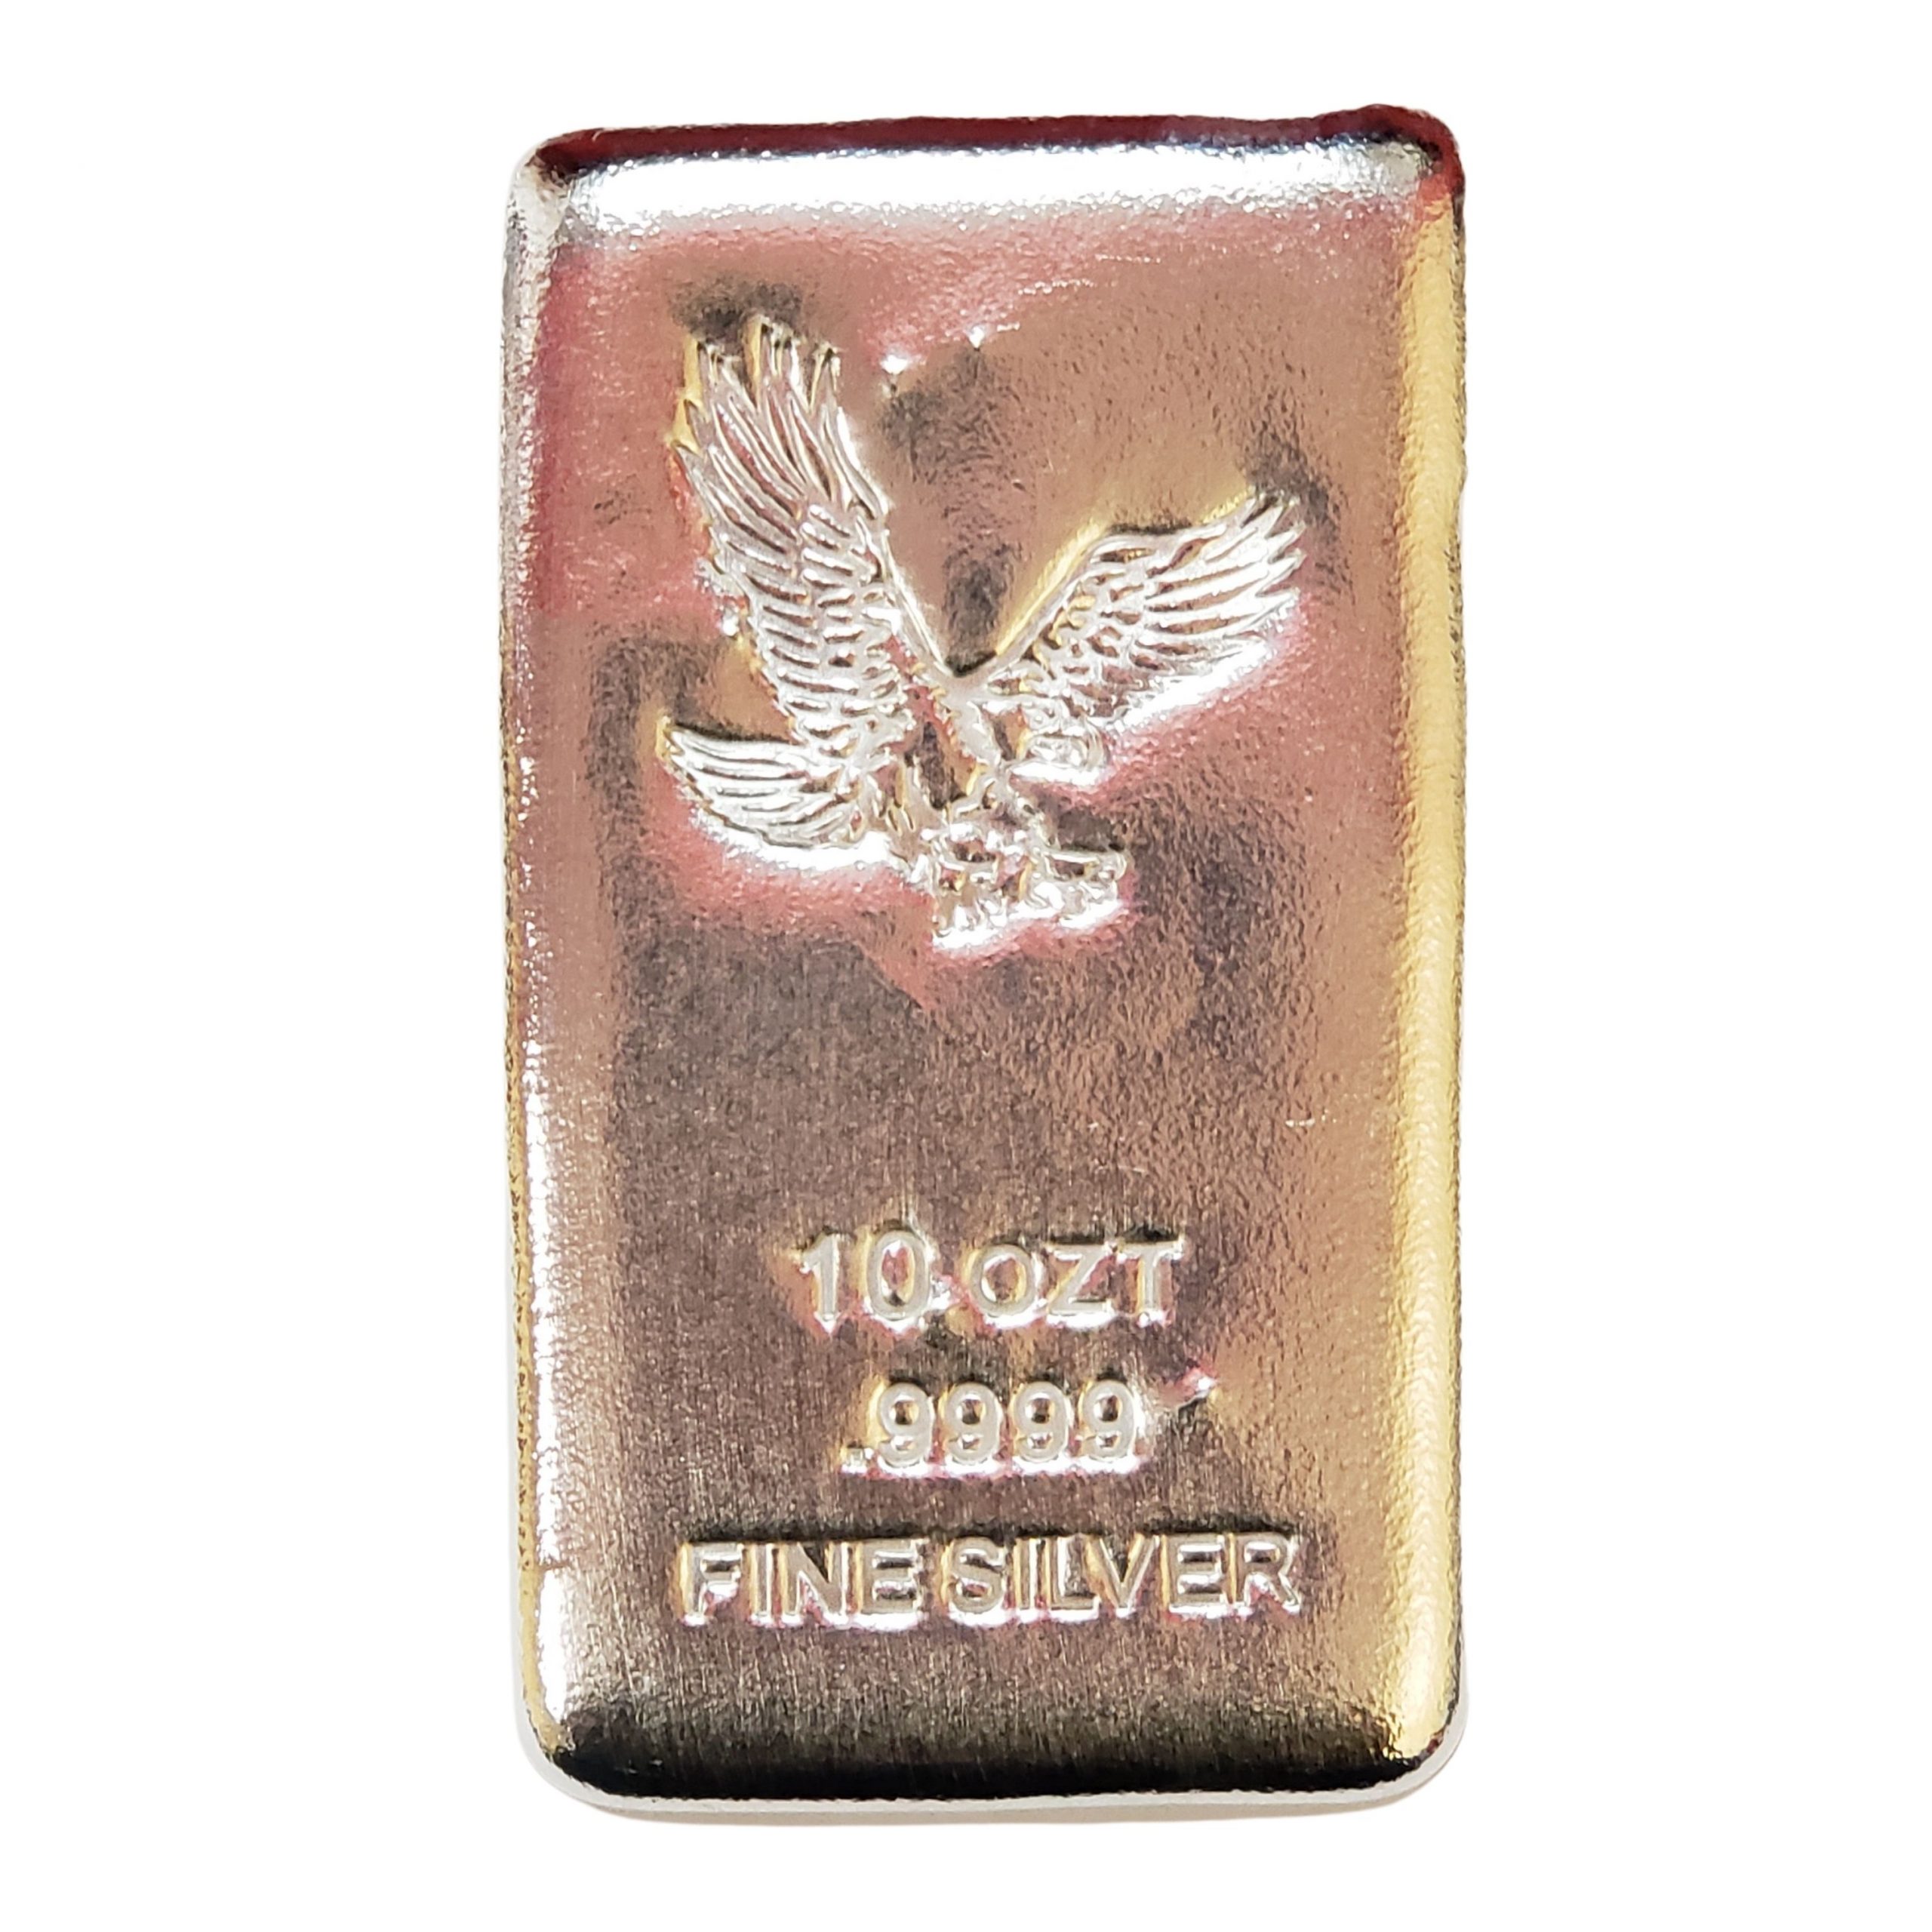 CNT 10 oz Silver Bar (Poured Eagle Design) - California Gold and Silver